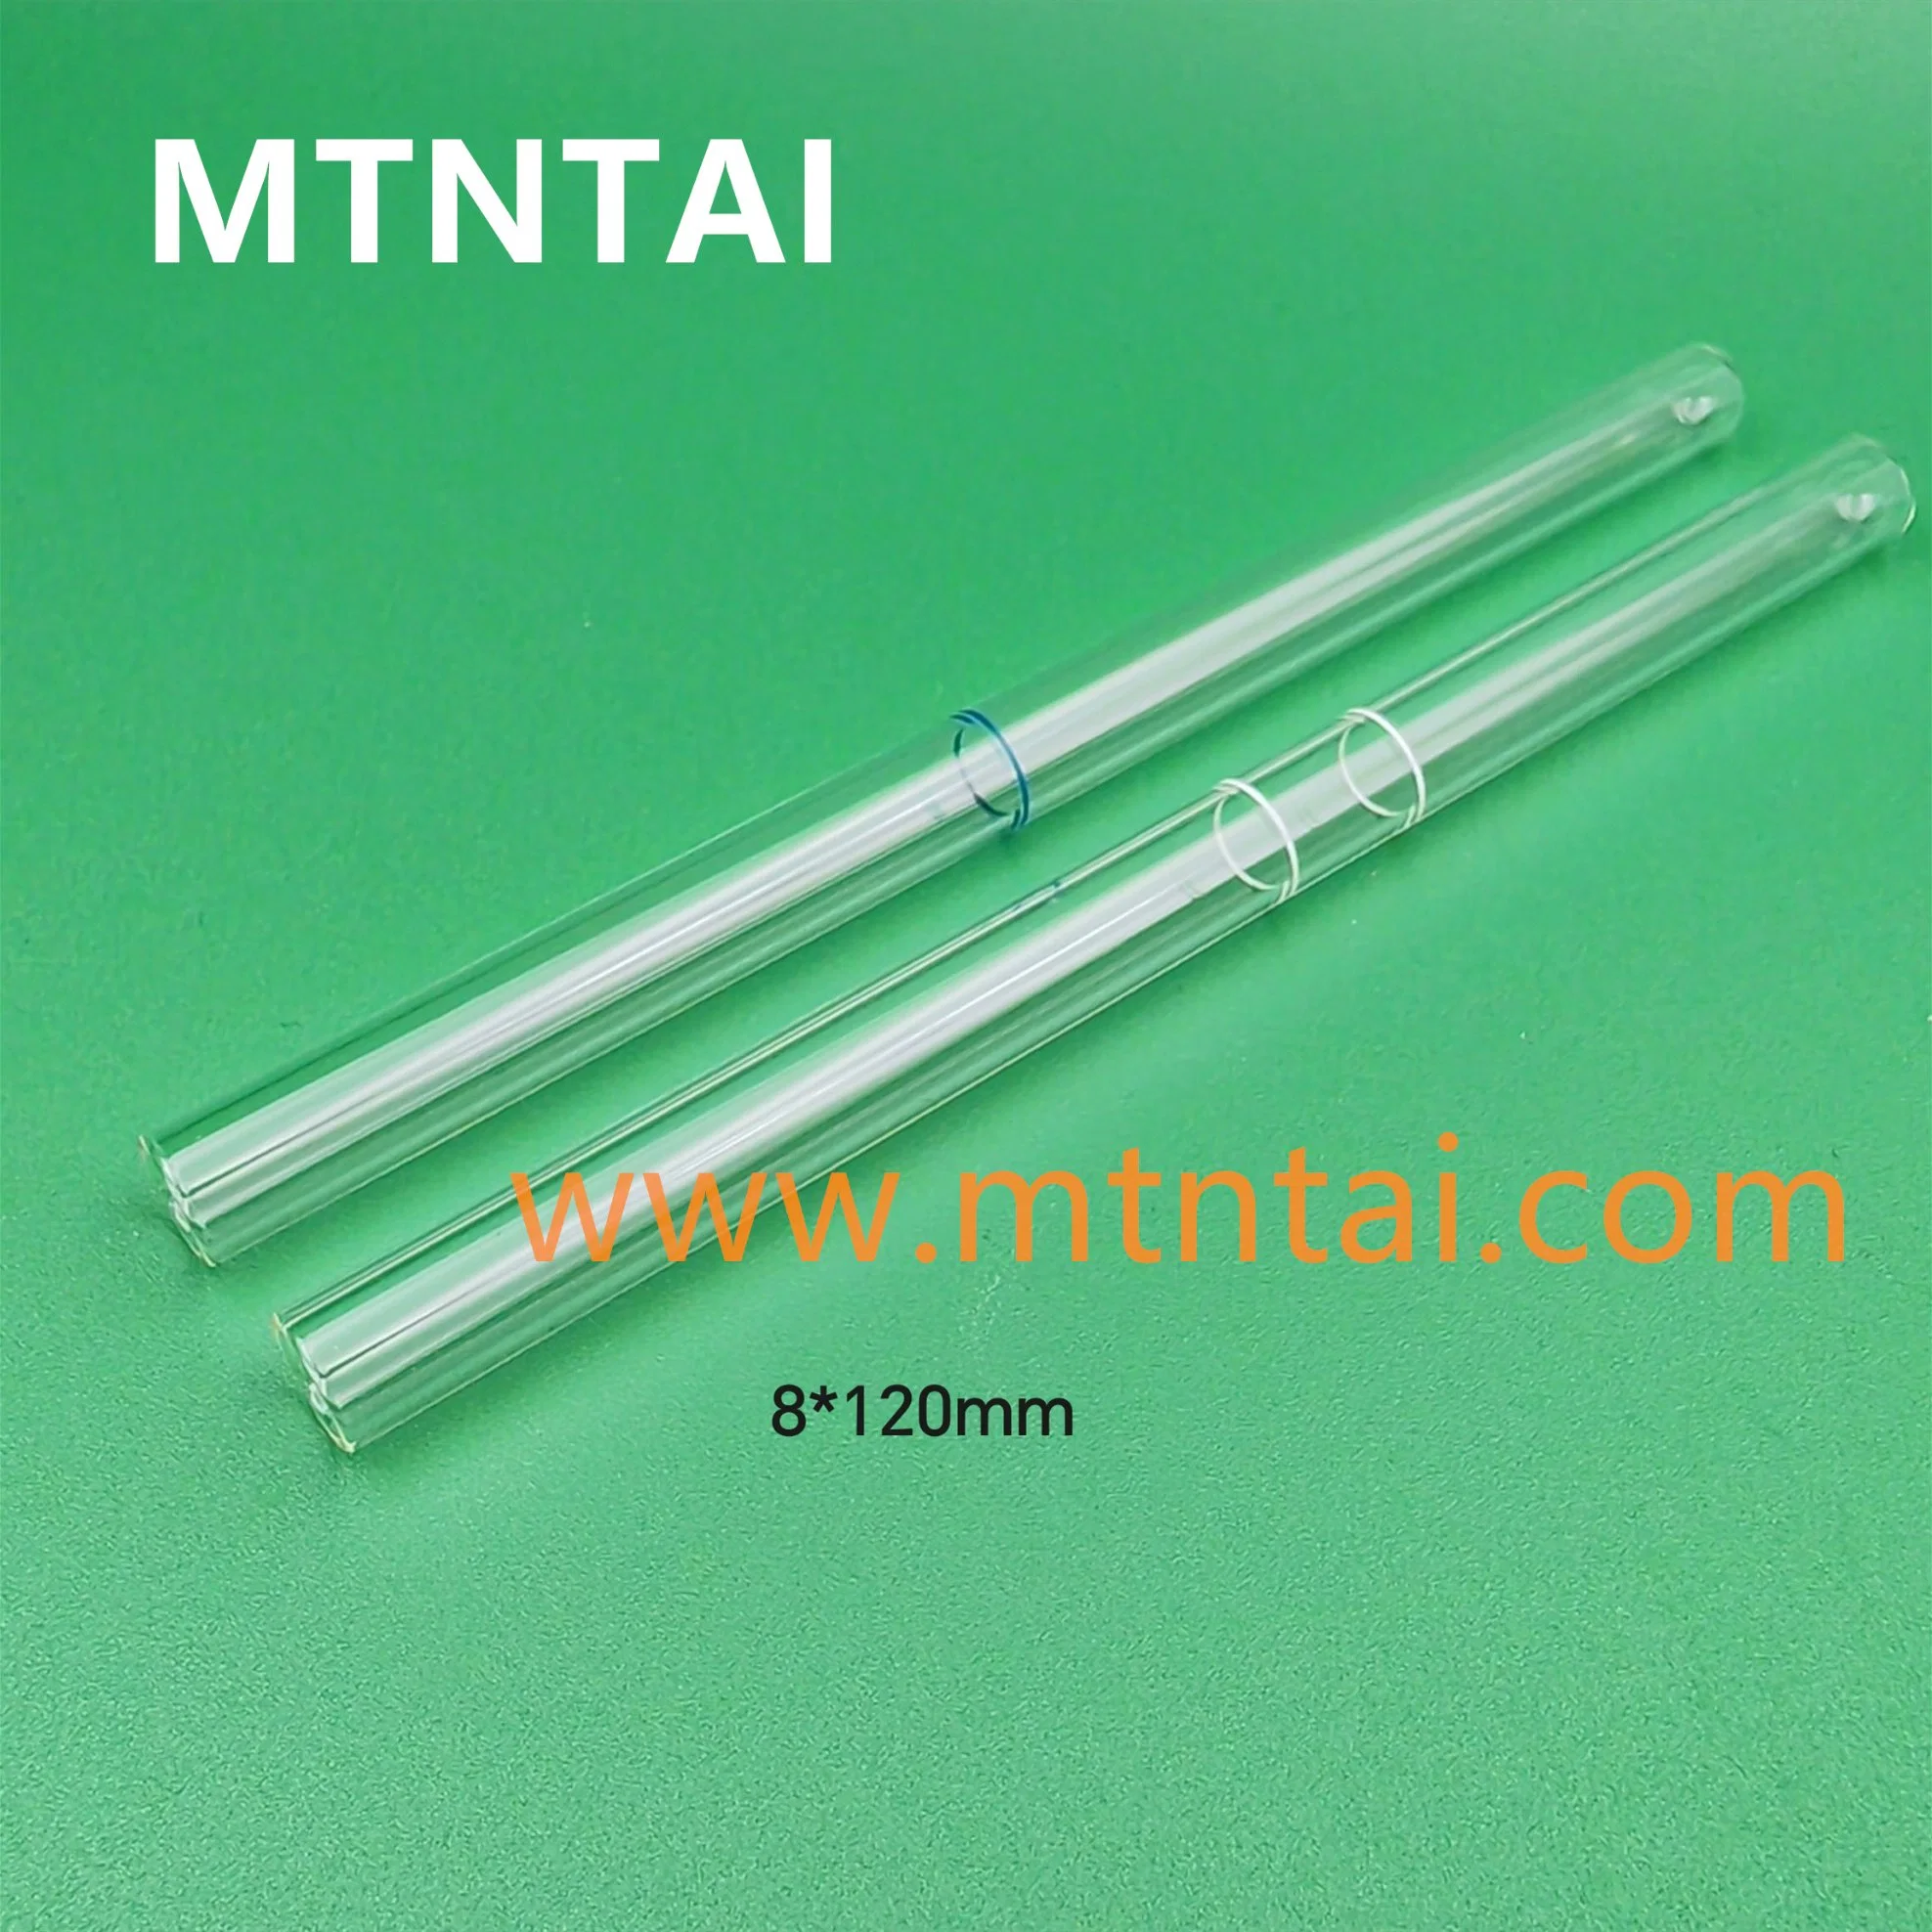 8*120mm Borosilicate Glass Tubes for Blood Seditamentation